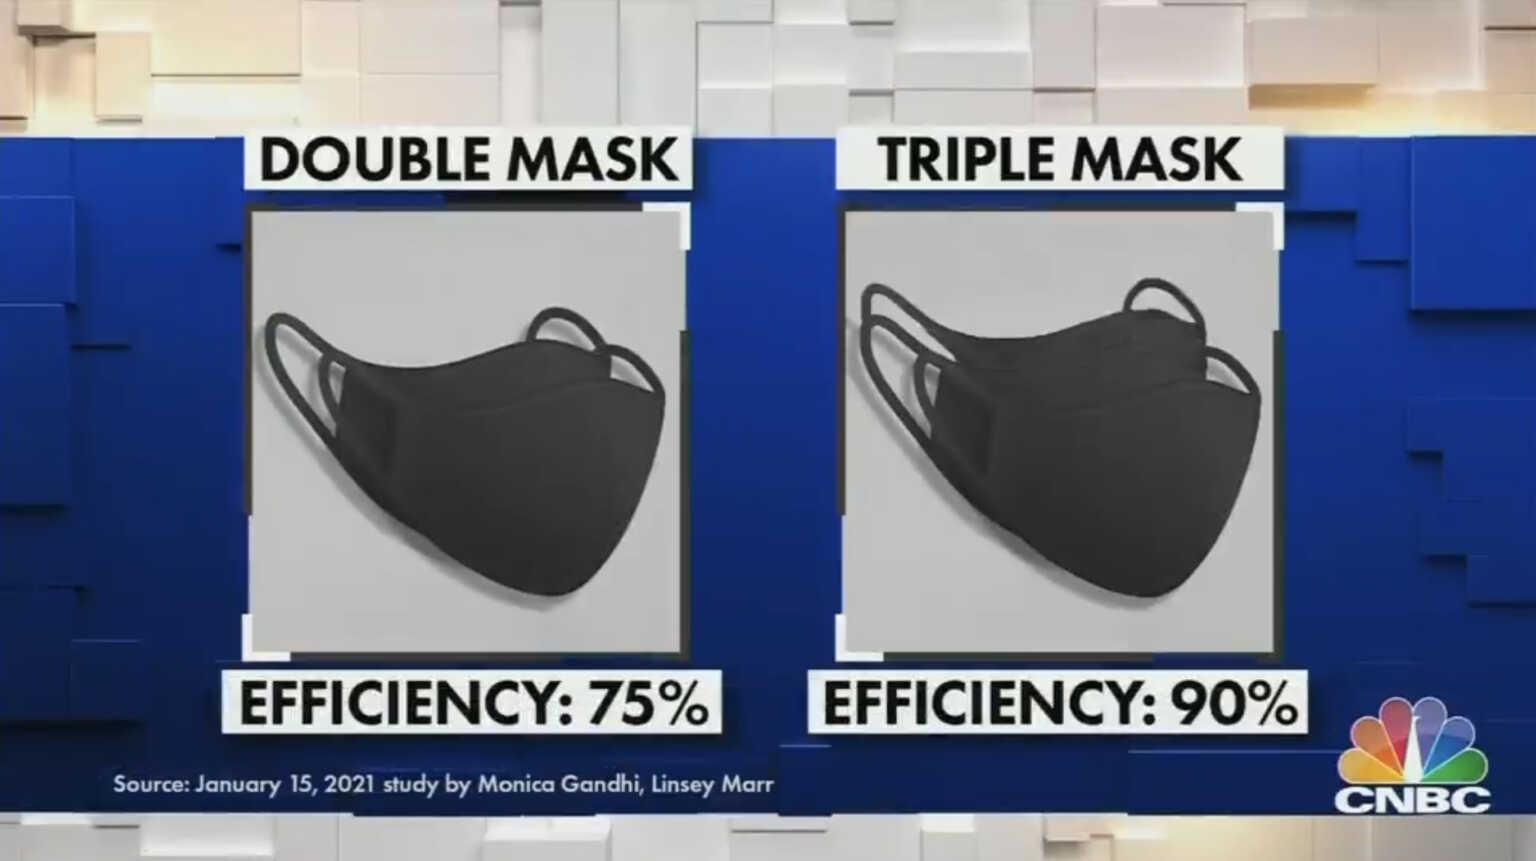 CNBC correspondent encourages viewers to wear three masks